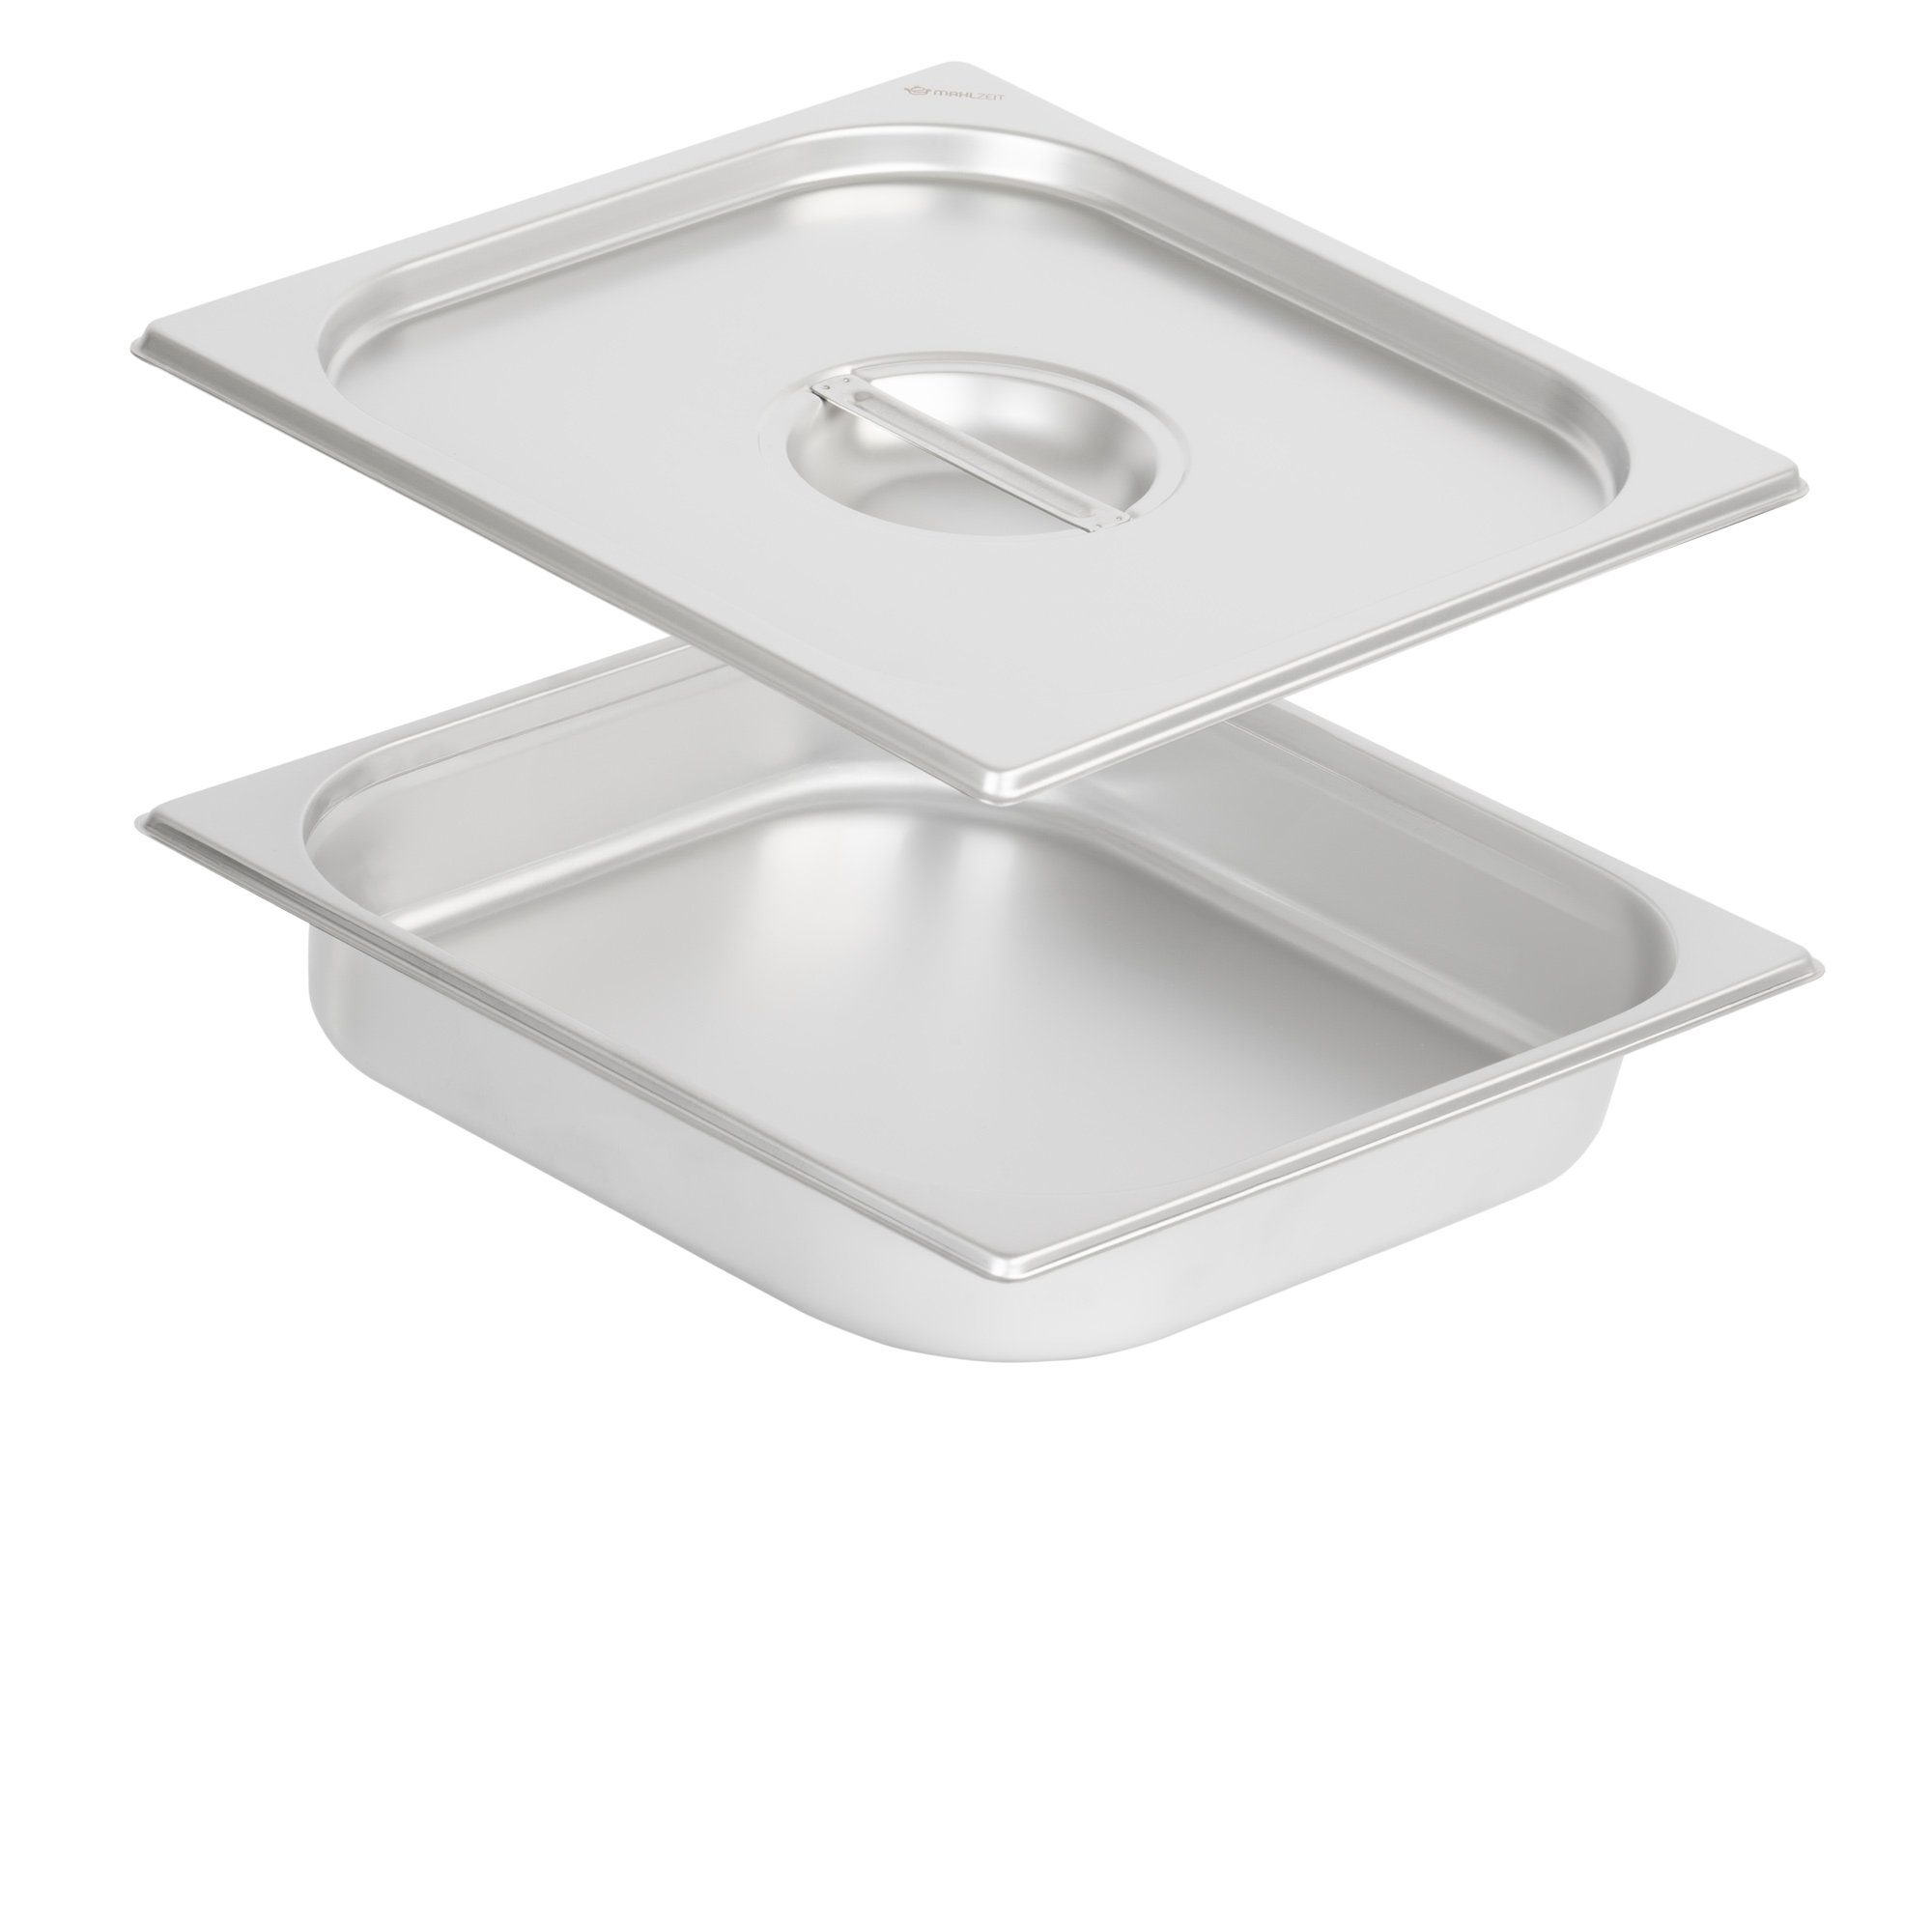 Mahlzeit Thermobehälter GN Behälter 2/3 mit Deckel, Höhe 65 mm, Edelstahl Wärmebehälter, Edelstahl, (Set, 2-tlg., 1x 2/3 GN Behälter mit Deckel(65 mm), für Chafing Dish